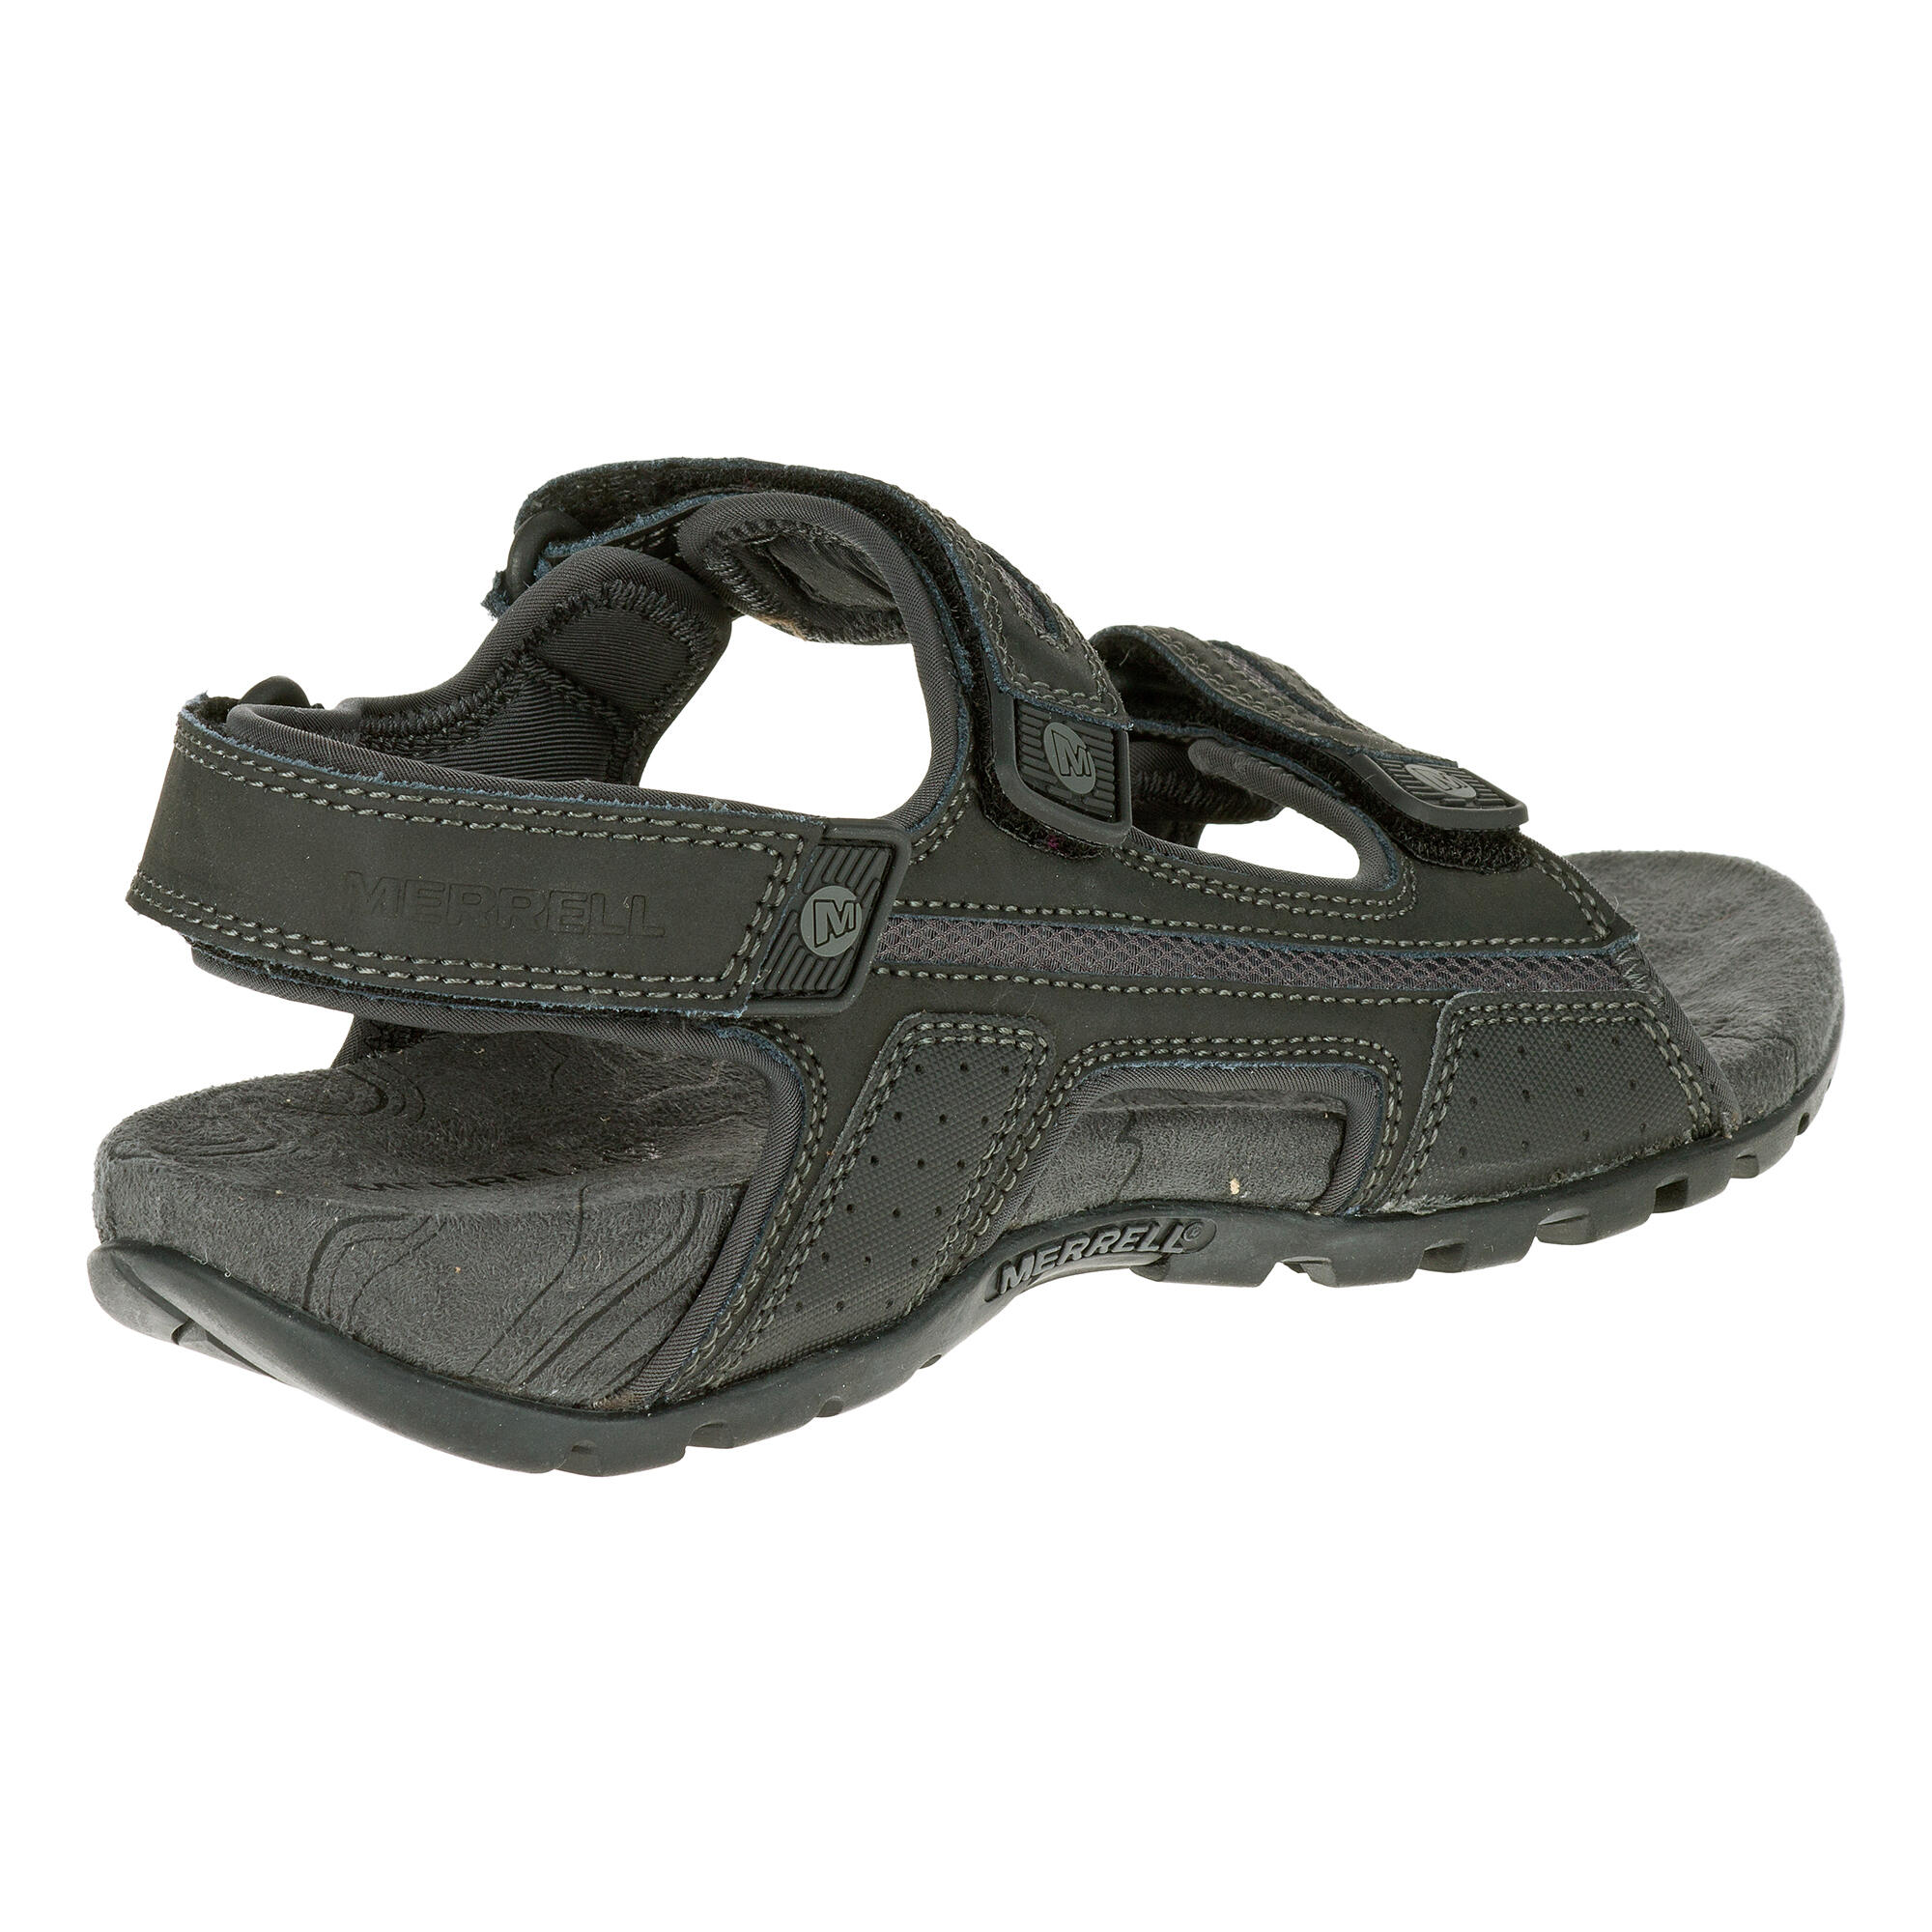 Men's walking sandals - Merrell Sandspur - Black 2/8